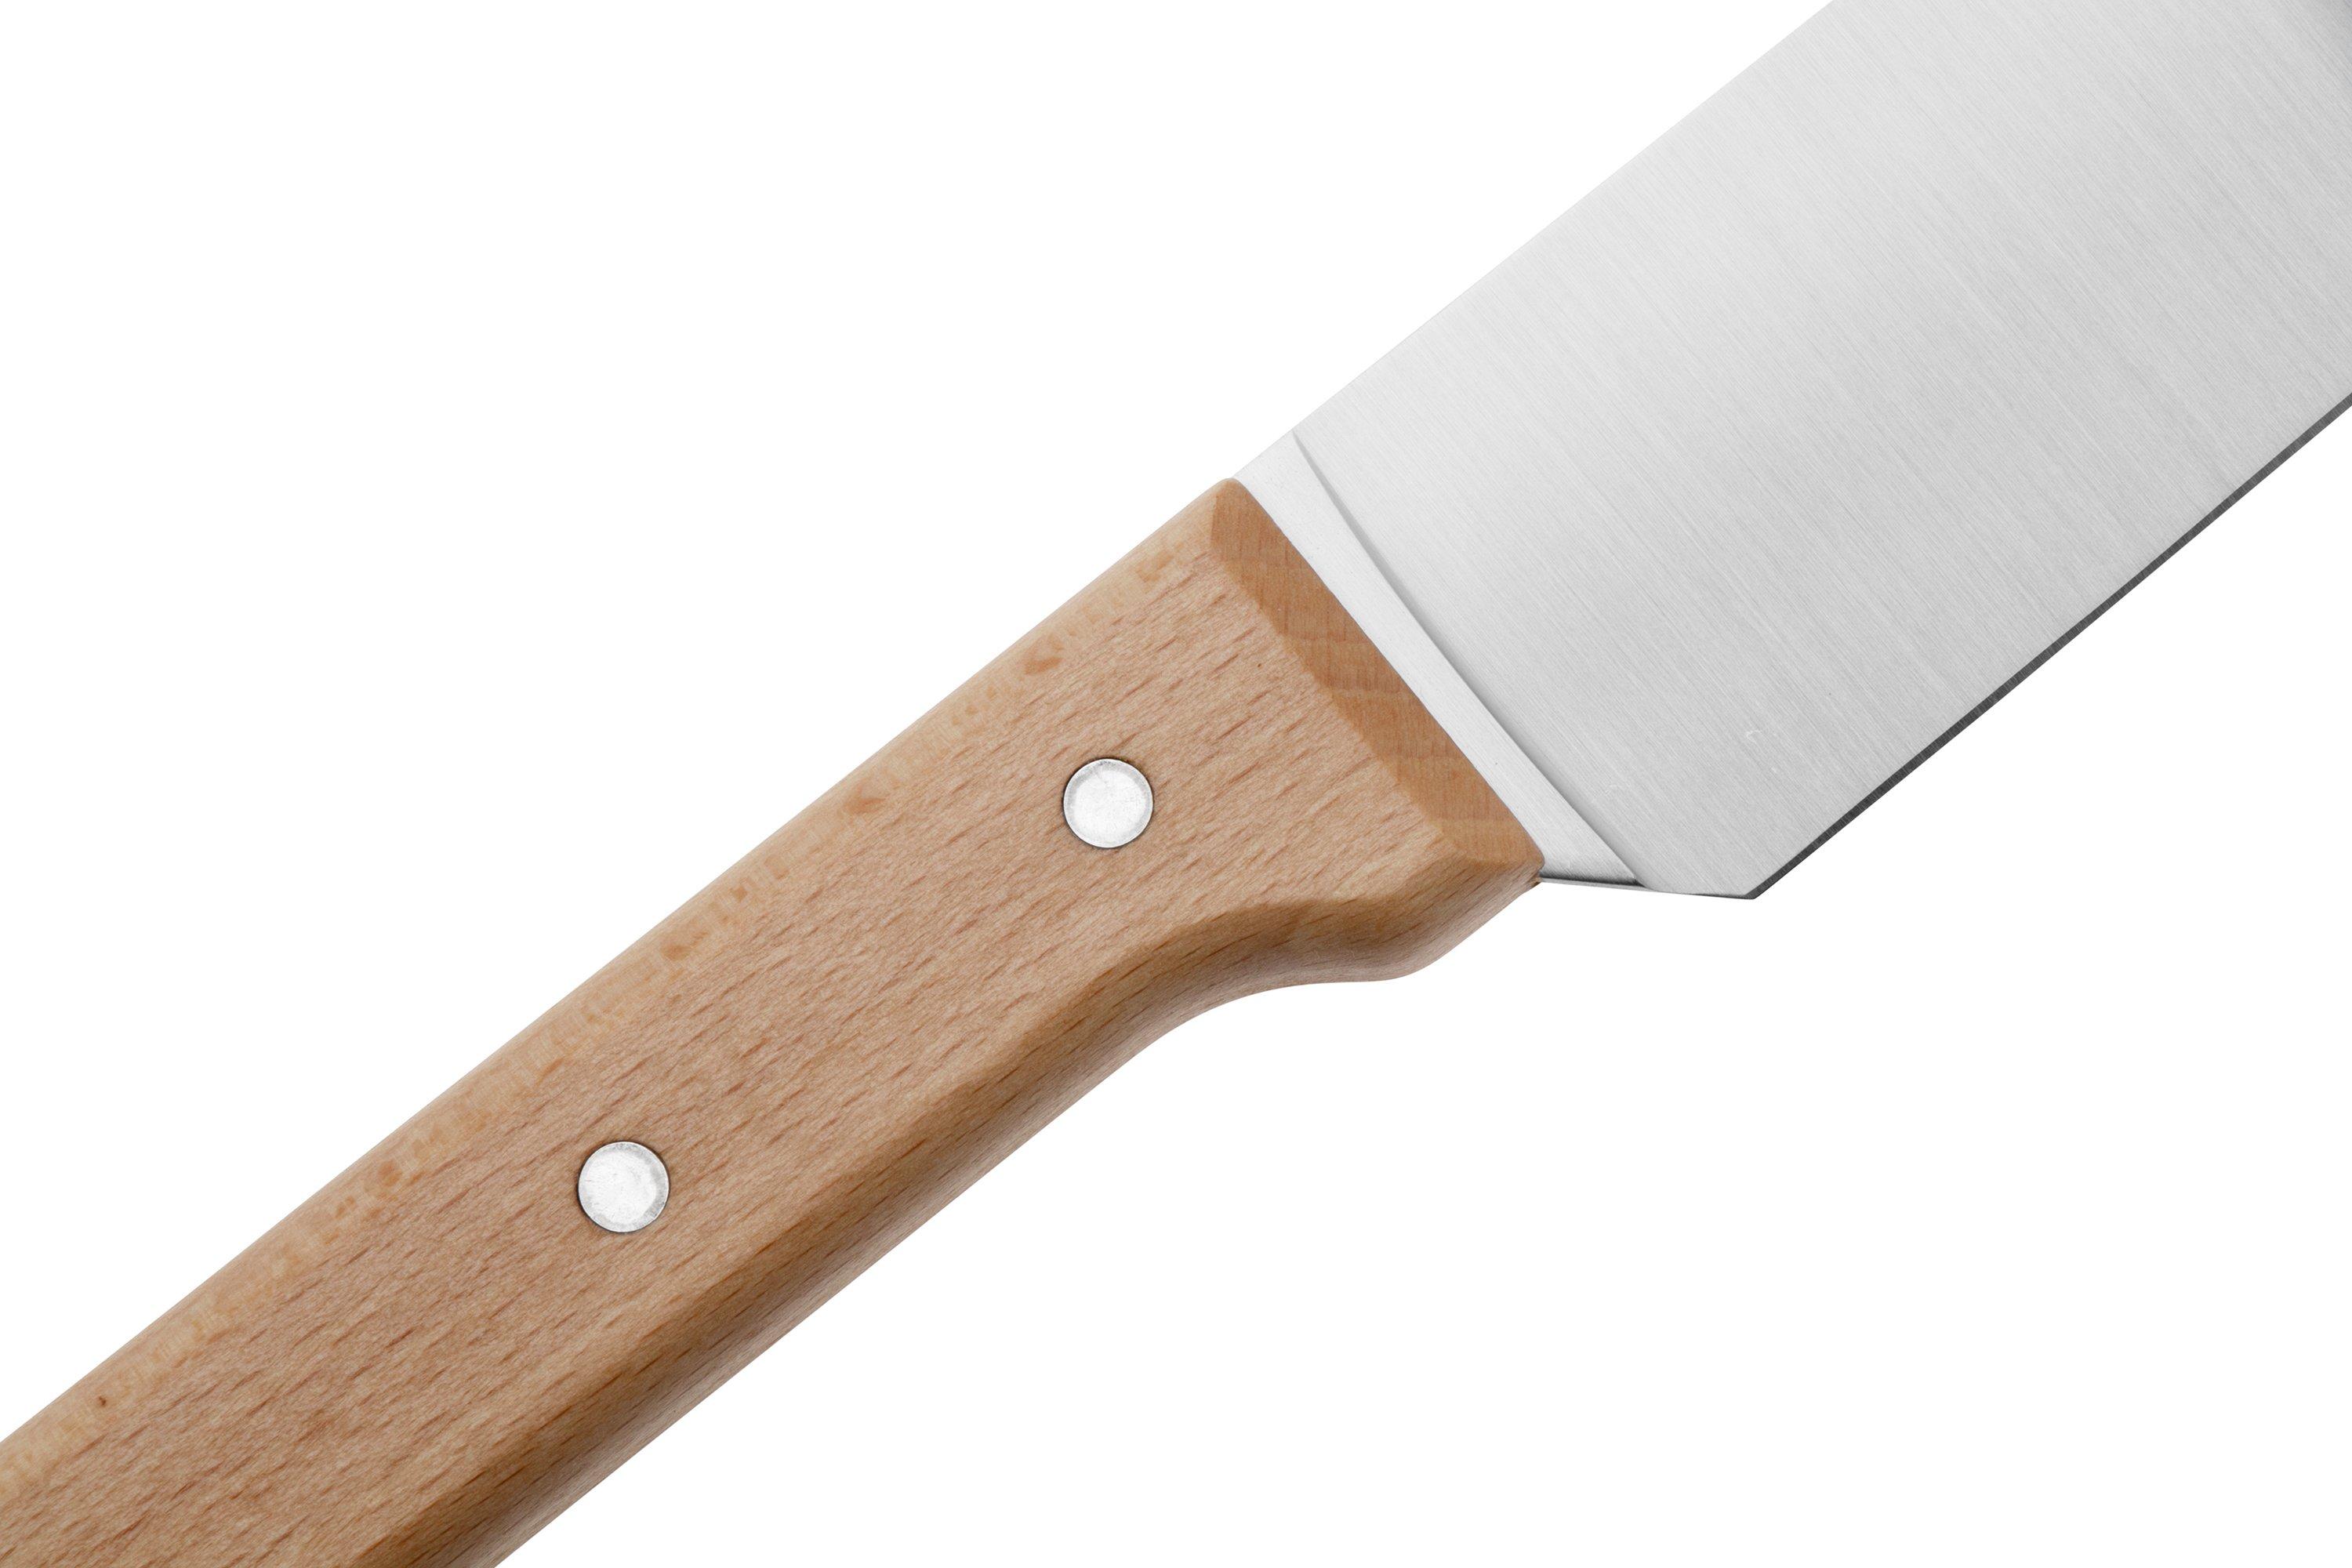 OPINEL ESSENTIAL SMALL KITCHEN KNIFE SET PRIMAVERA (001709) - BRAND NEW